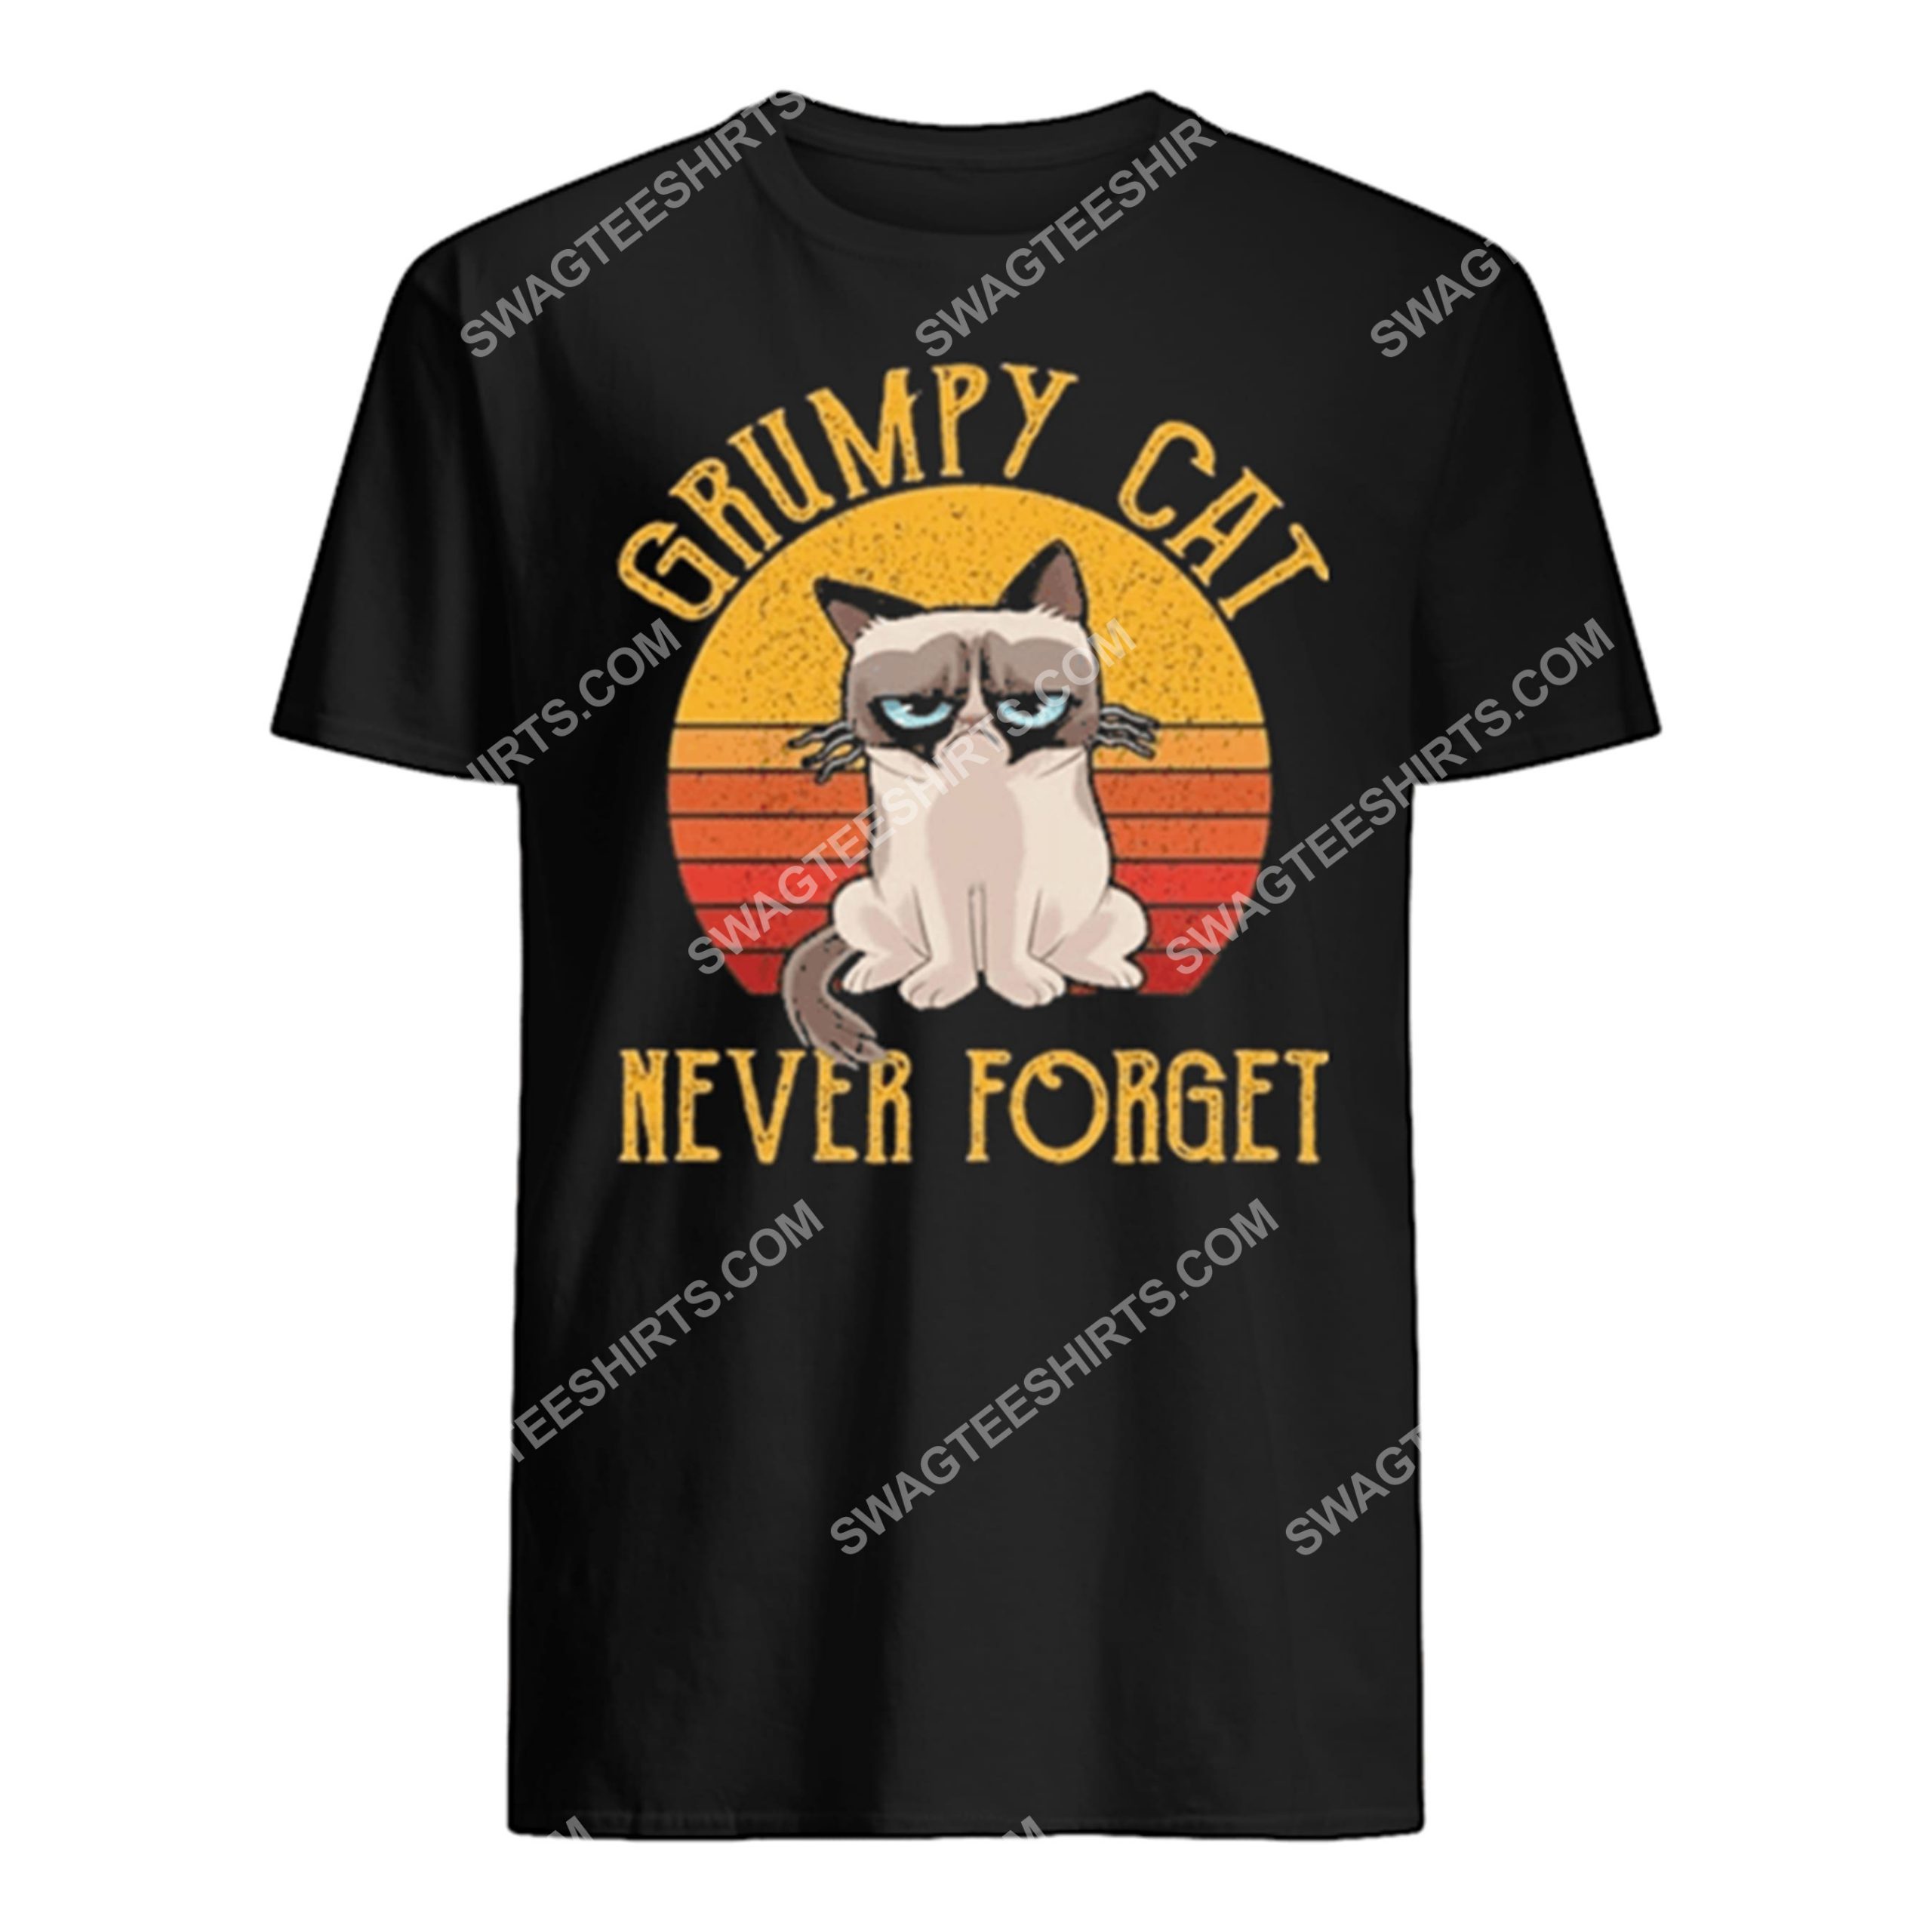 vintage grumpy cat never forget shirt 1(1) - Copy